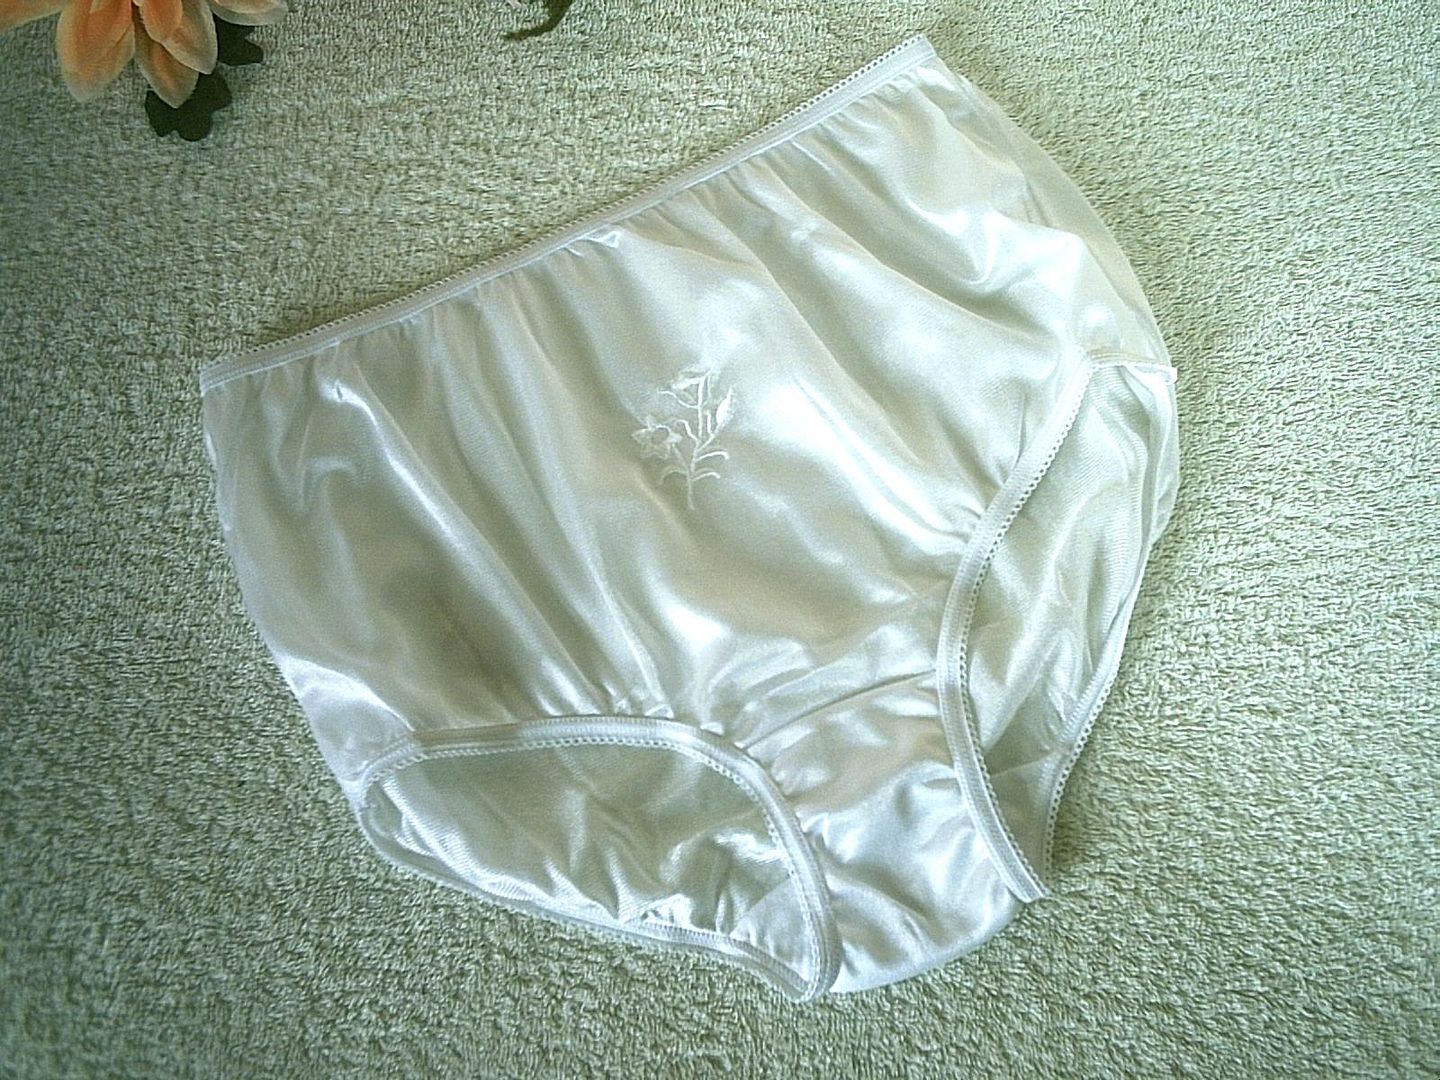 Ladies Silky White Nylon Vintage Style Full Brief Pinup Panties 36 38 Ebay 